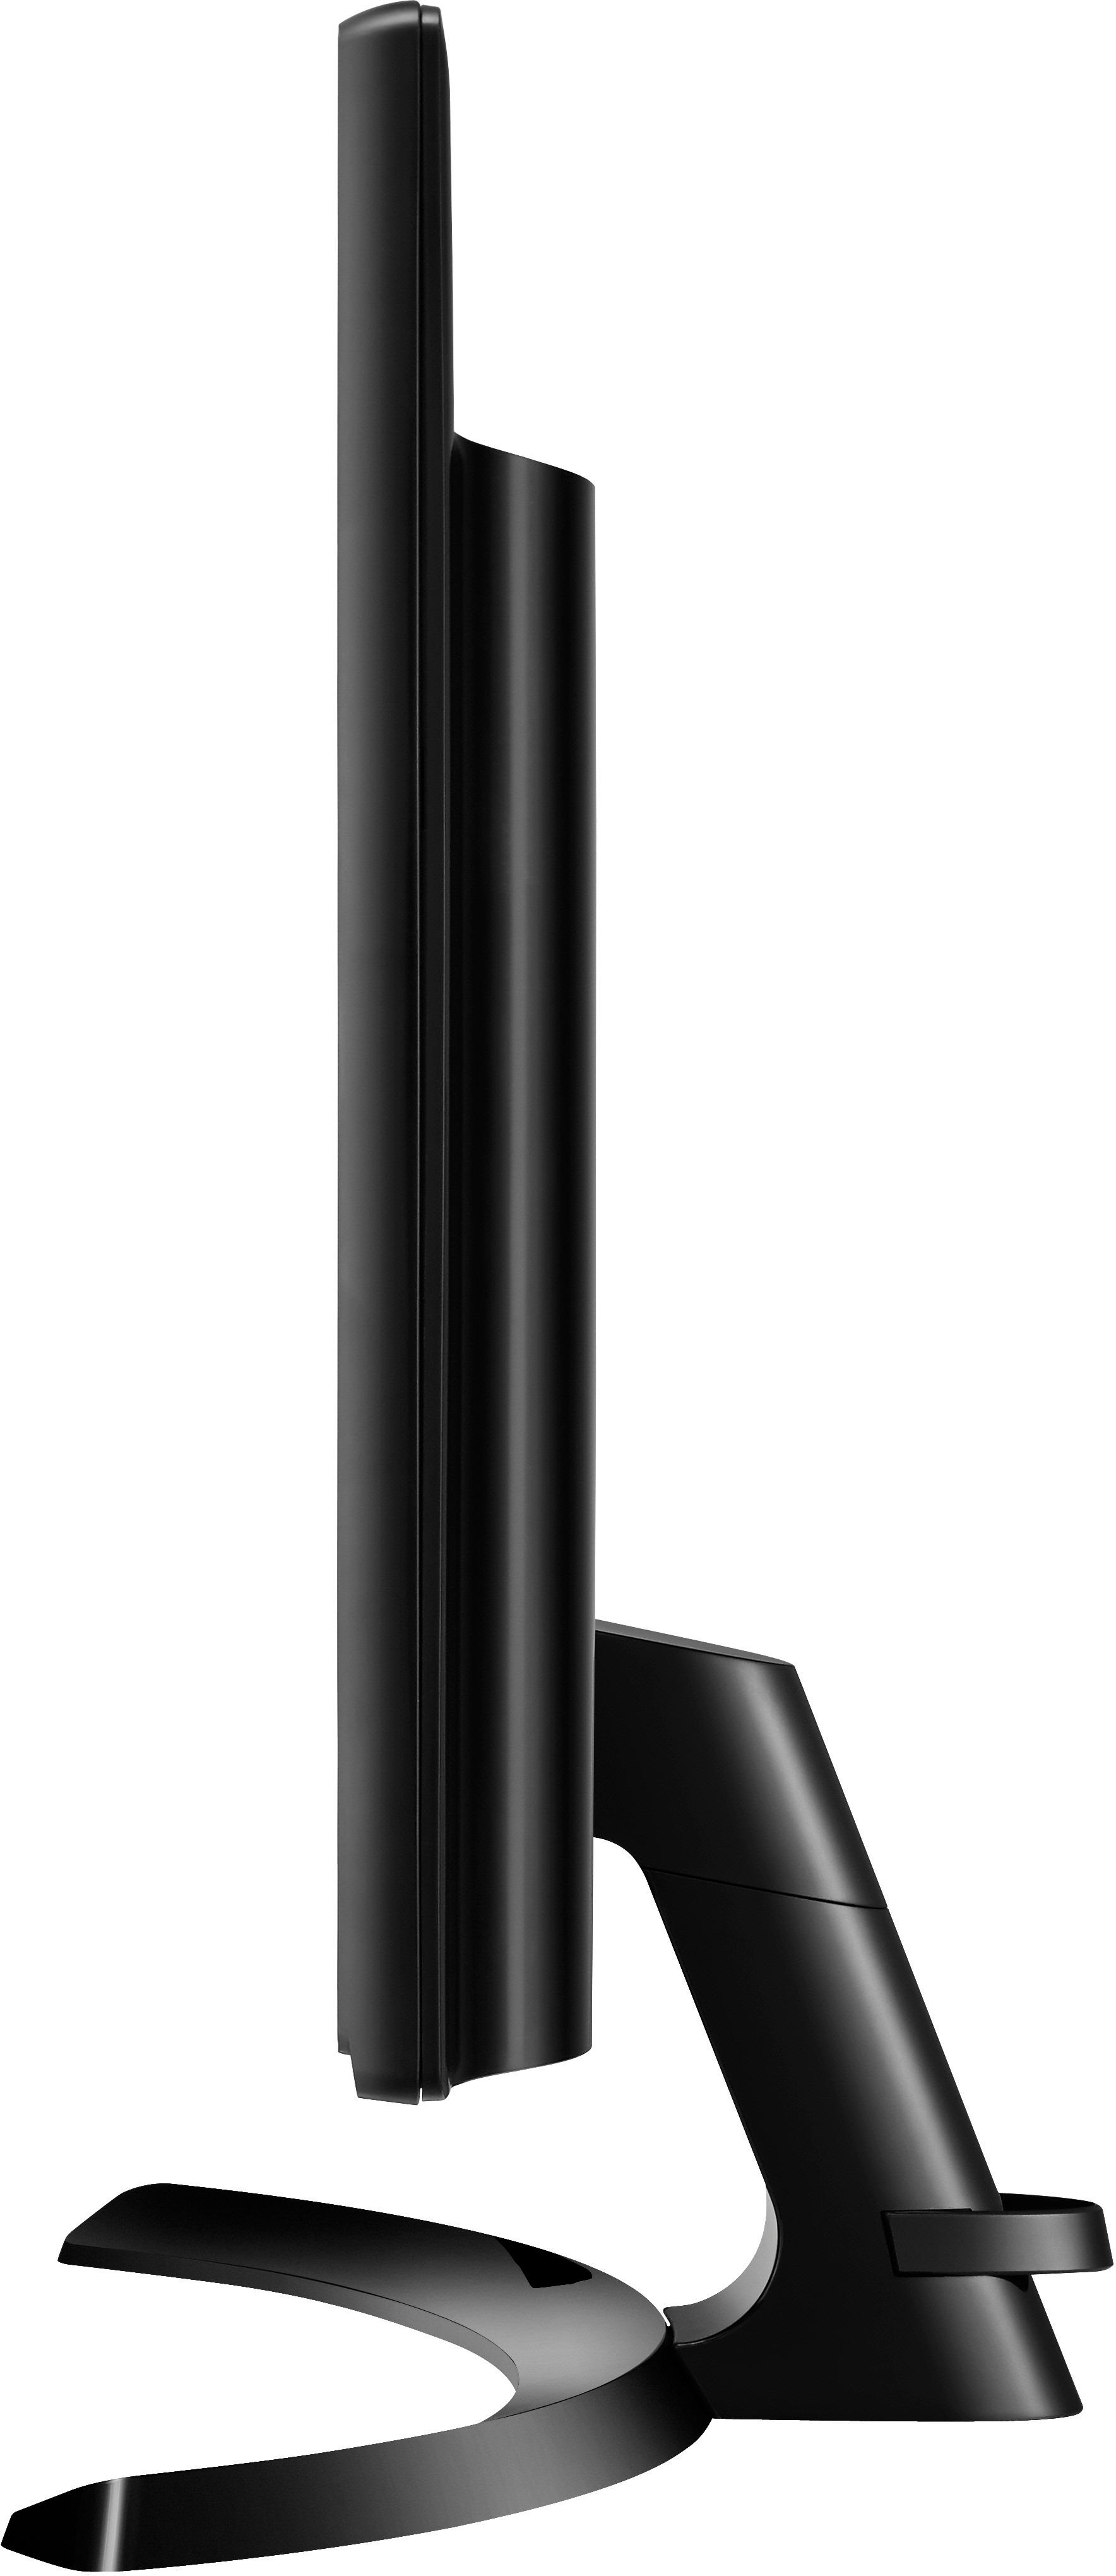 LG 24" LED 4K FreeSync Monitor (HDMI, Display Port) Black - Best Buy